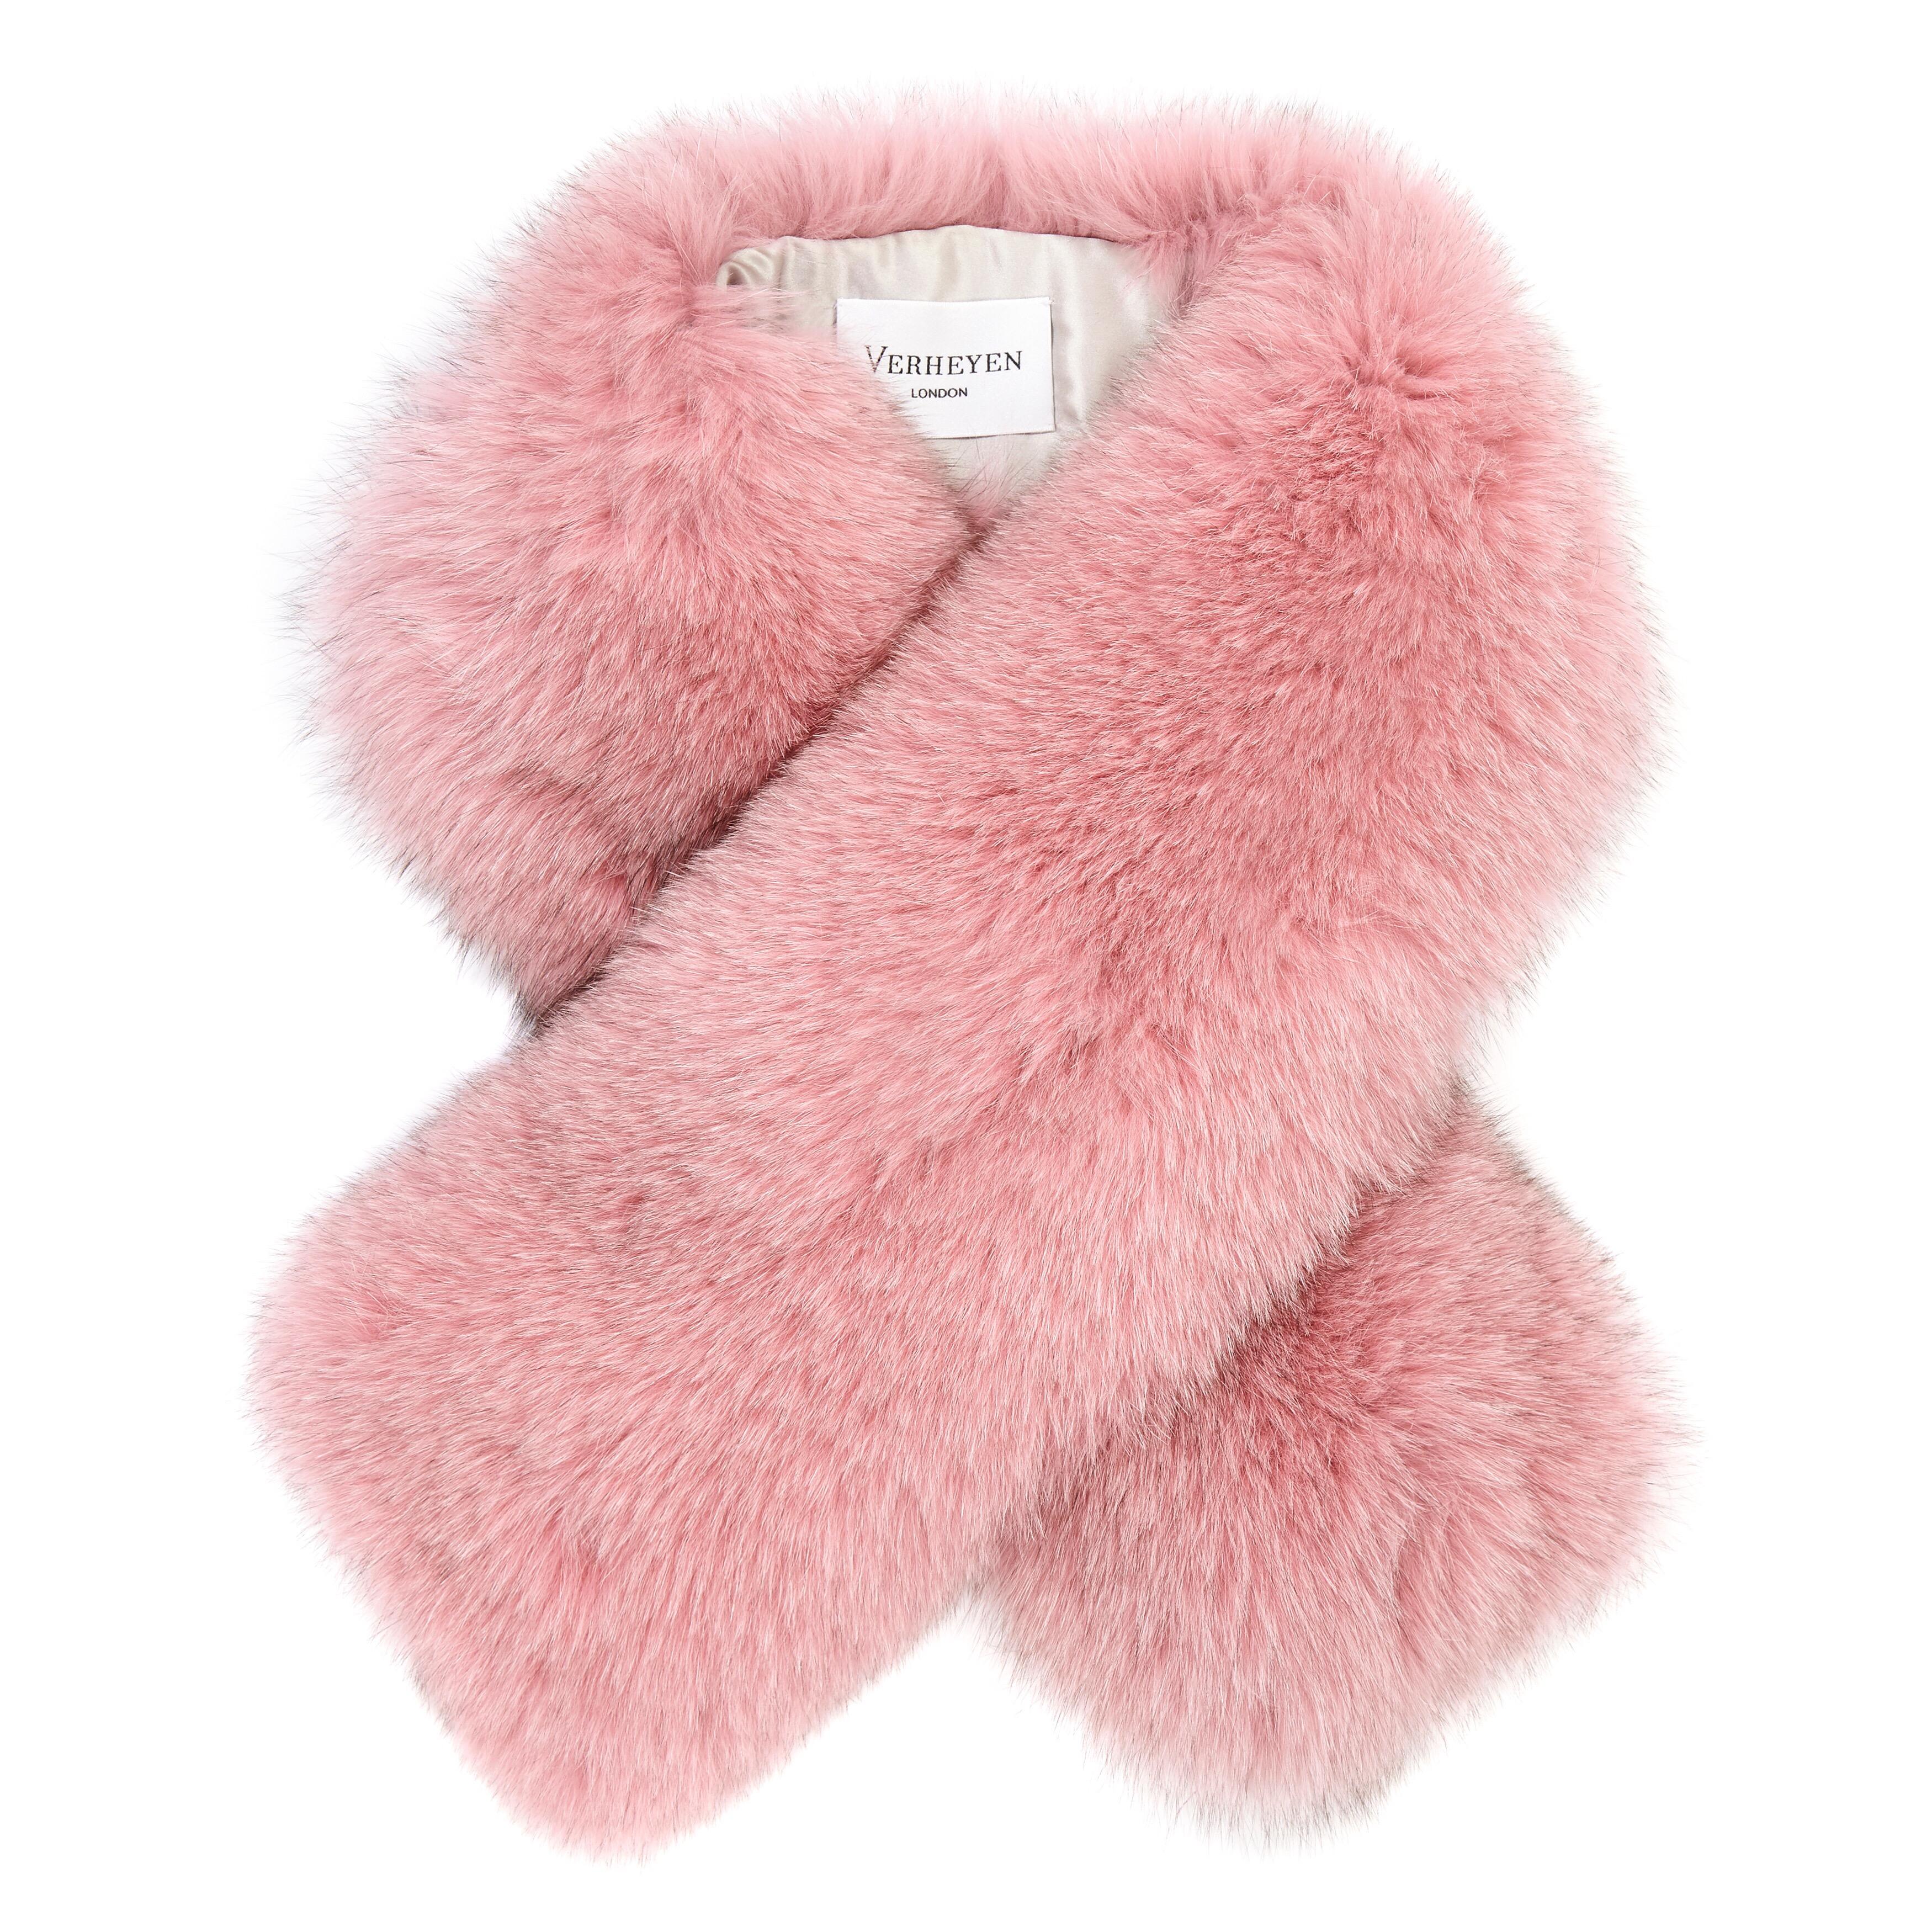 Verheyen London Lapel Cross-through Collar in Rose Petal in Fox Fur